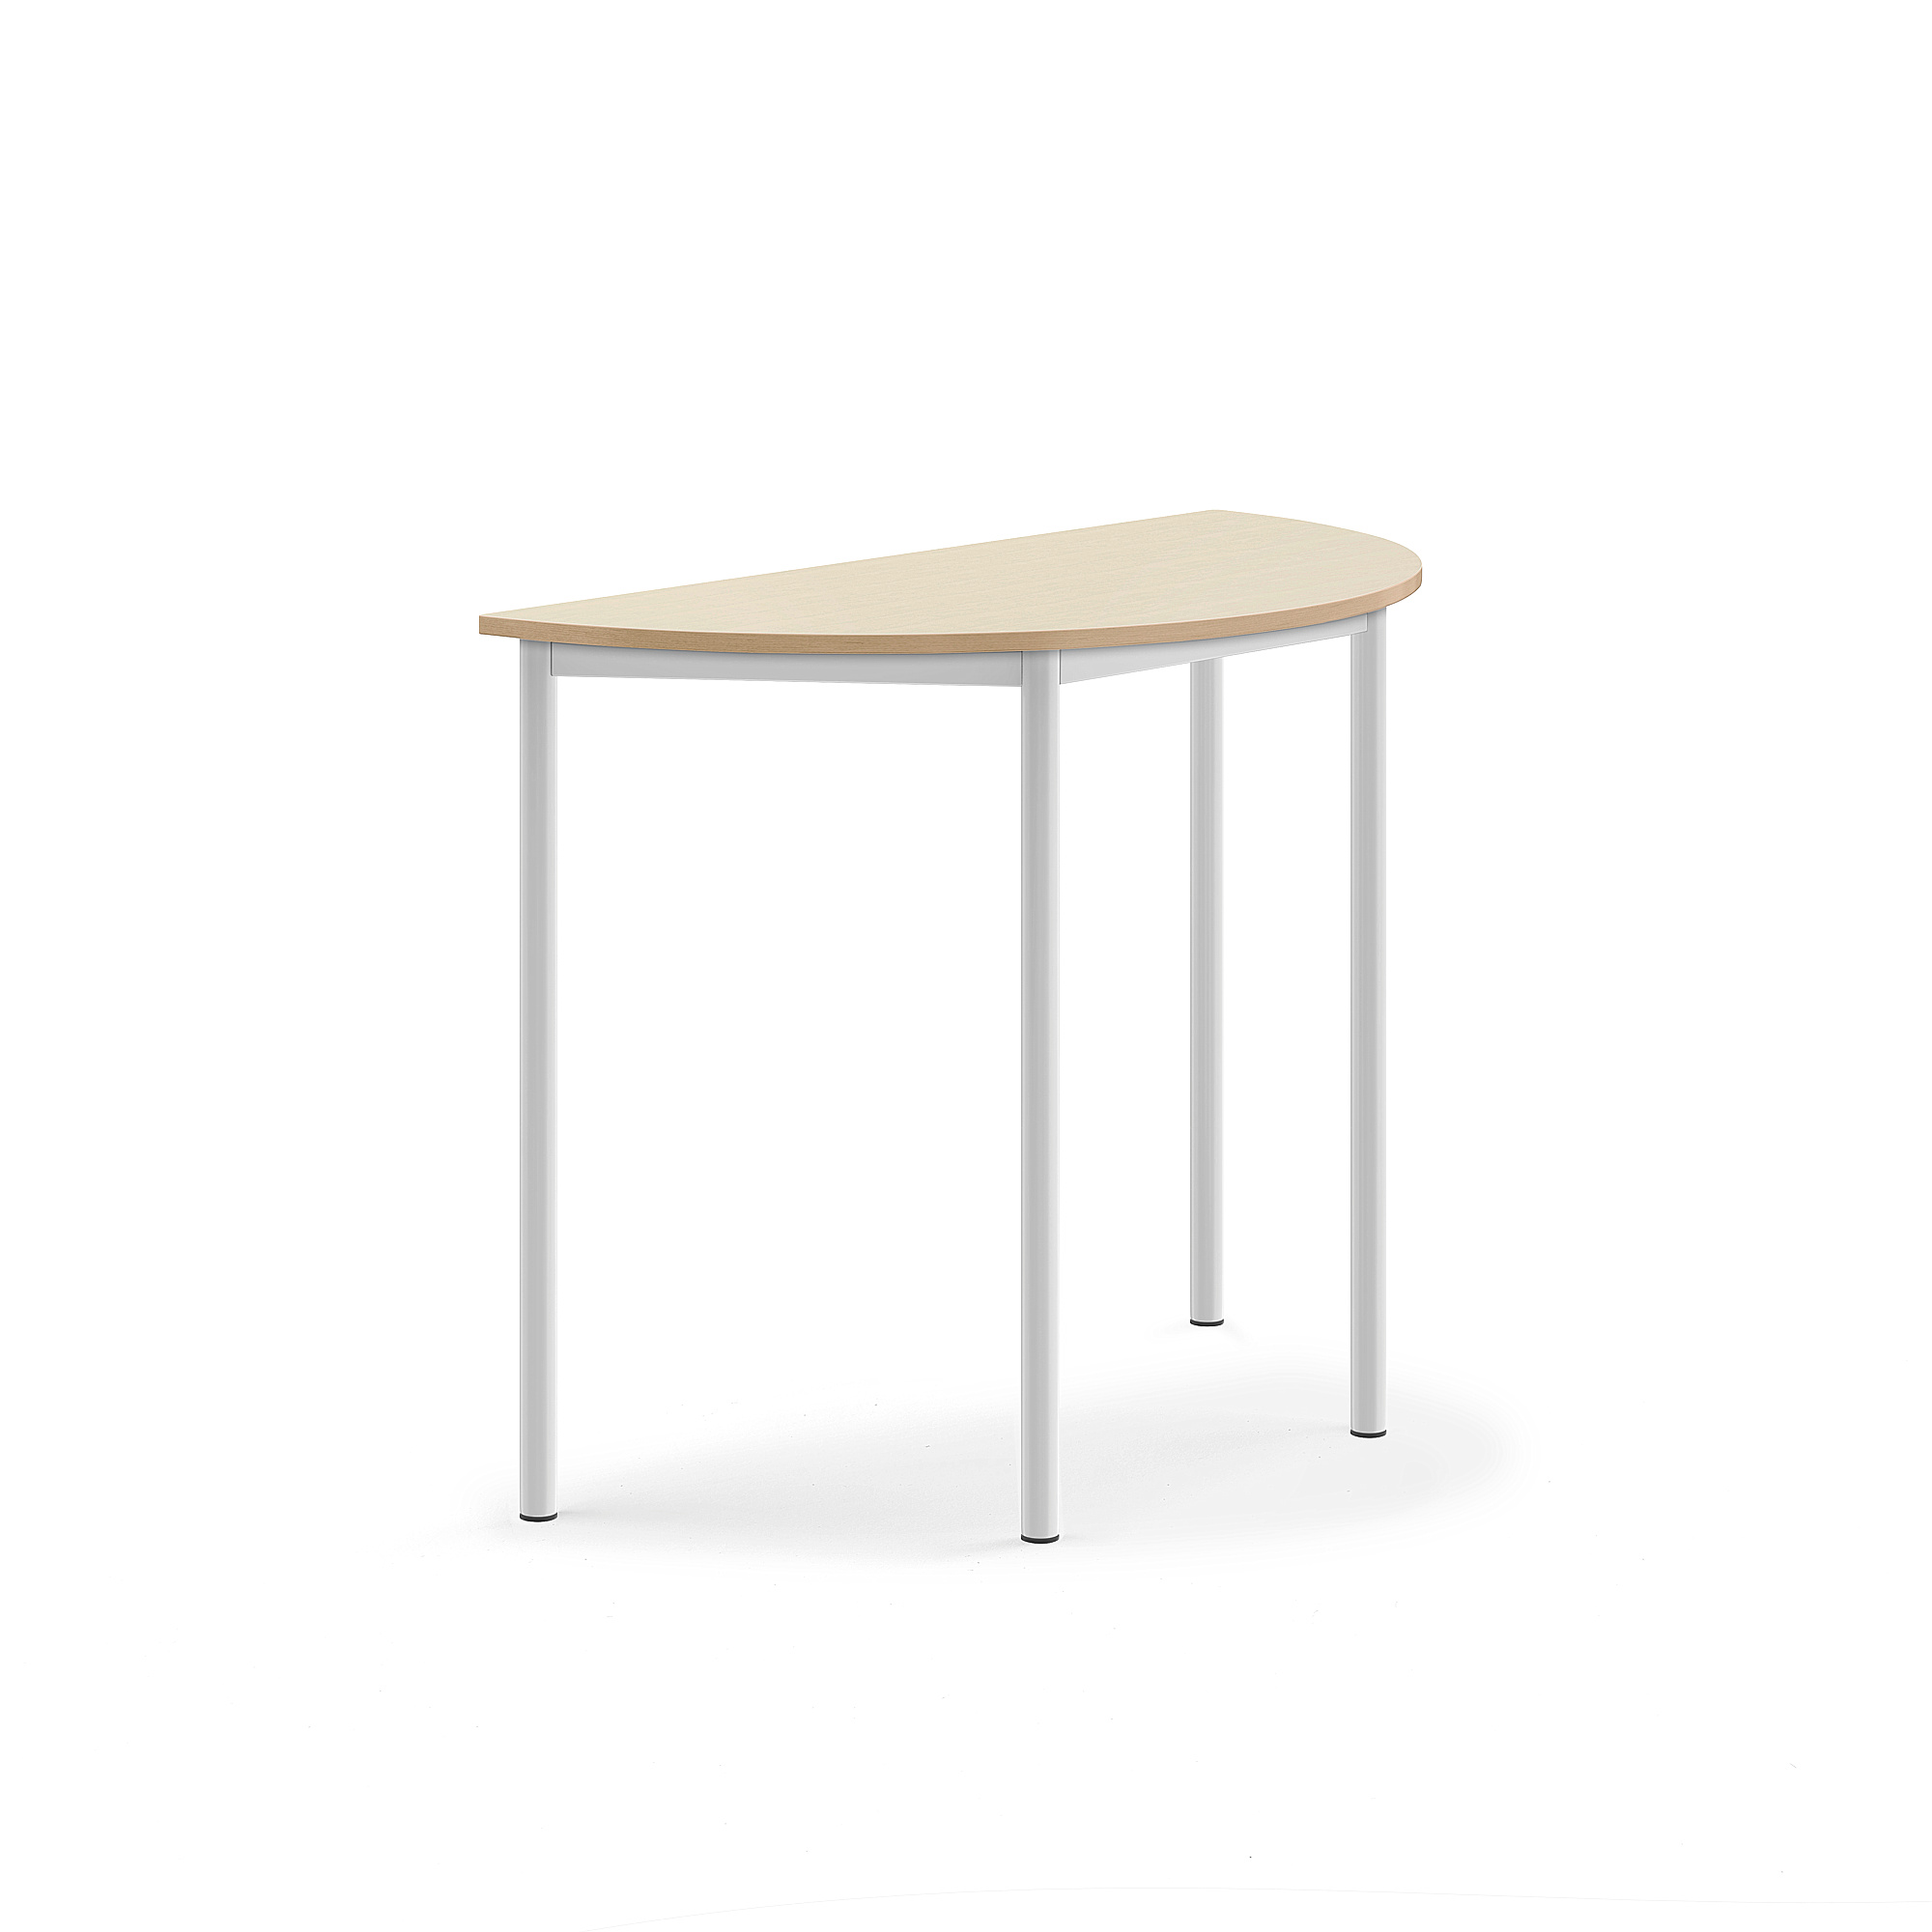 Stůl SONITUS, půlkruh, 1200x600x900 mm, bílé nohy, HPL deska tlumící hluk, bříza